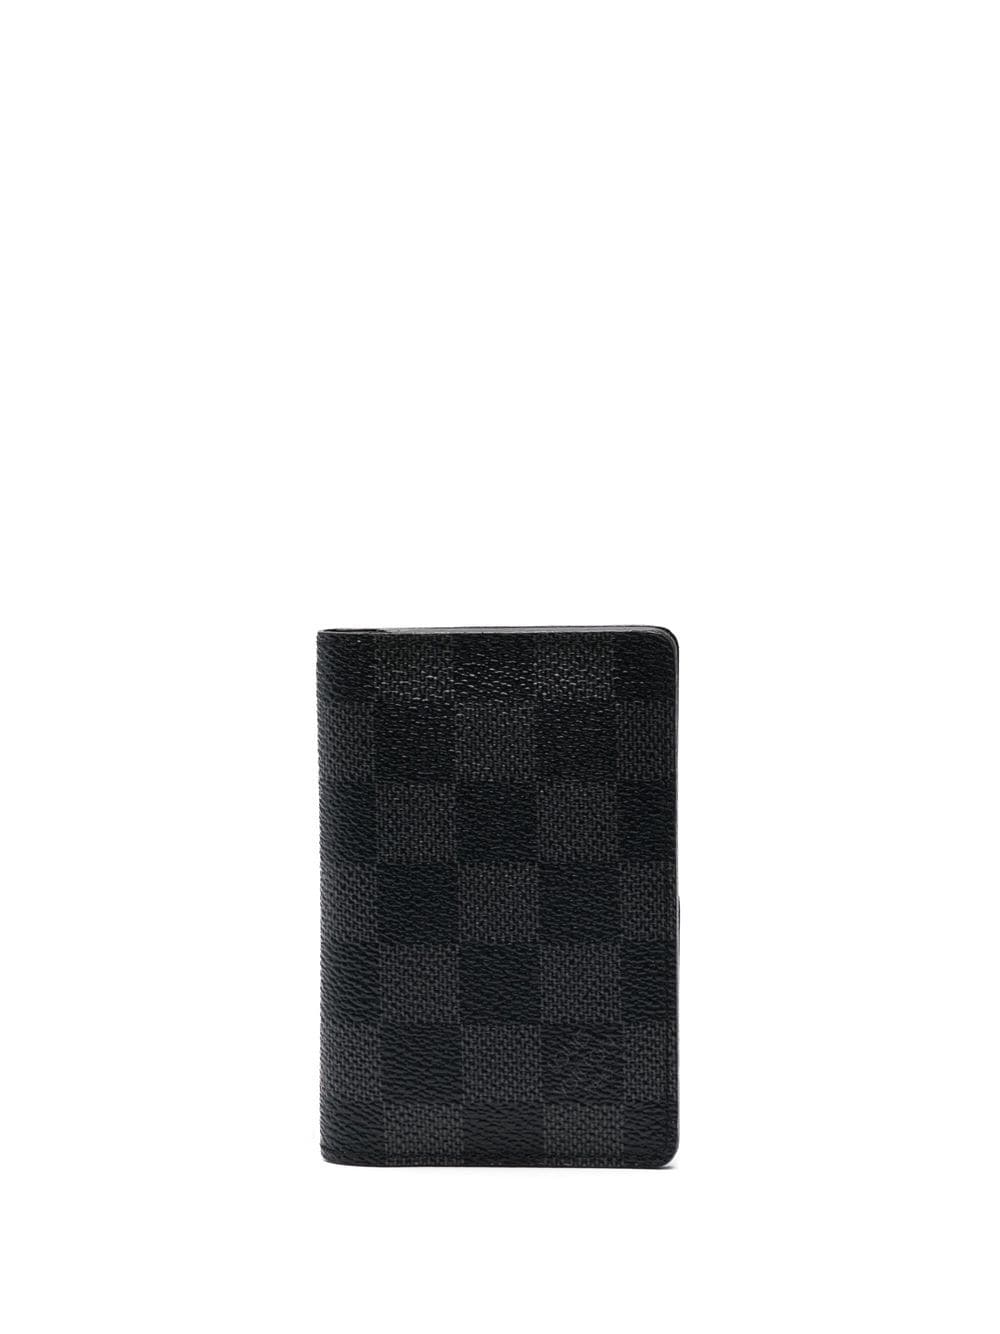 Louis Vuitton 2011 pre-owned Damier Graphite wallet